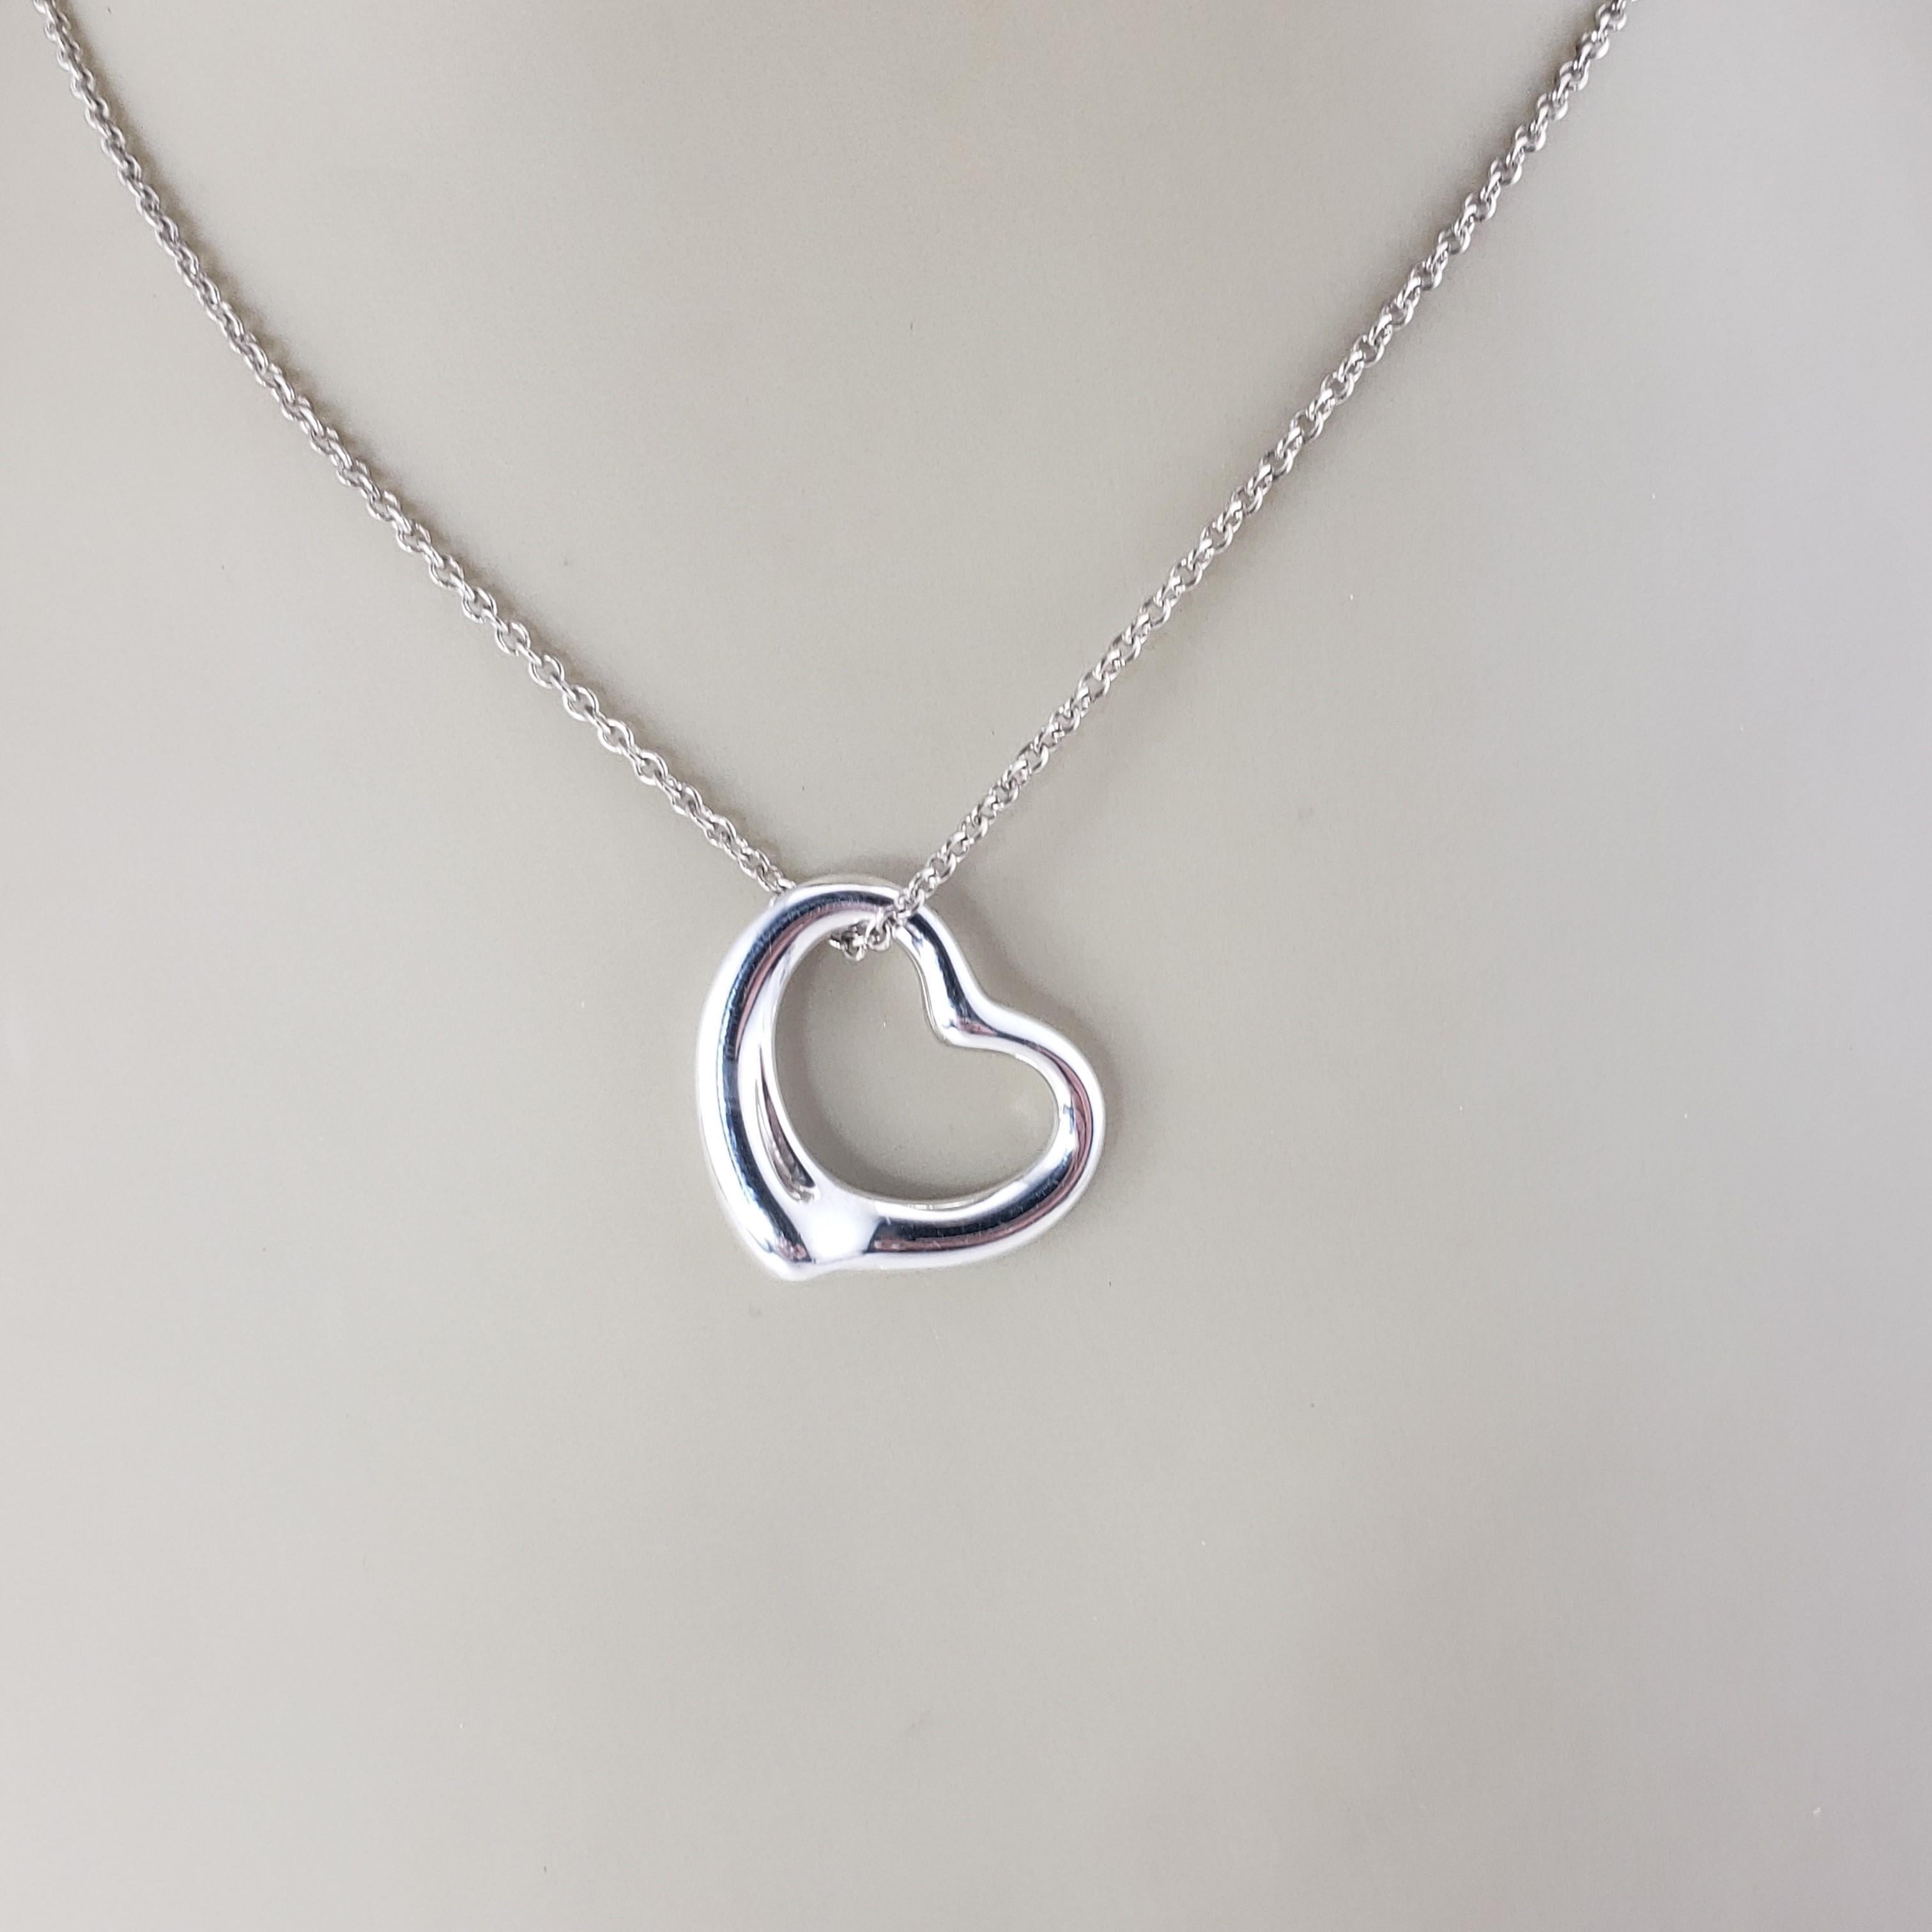 Tiffany & Co. Elsa Peretti Sterling Silver Open Heart Necklace #16845 For Sale 4